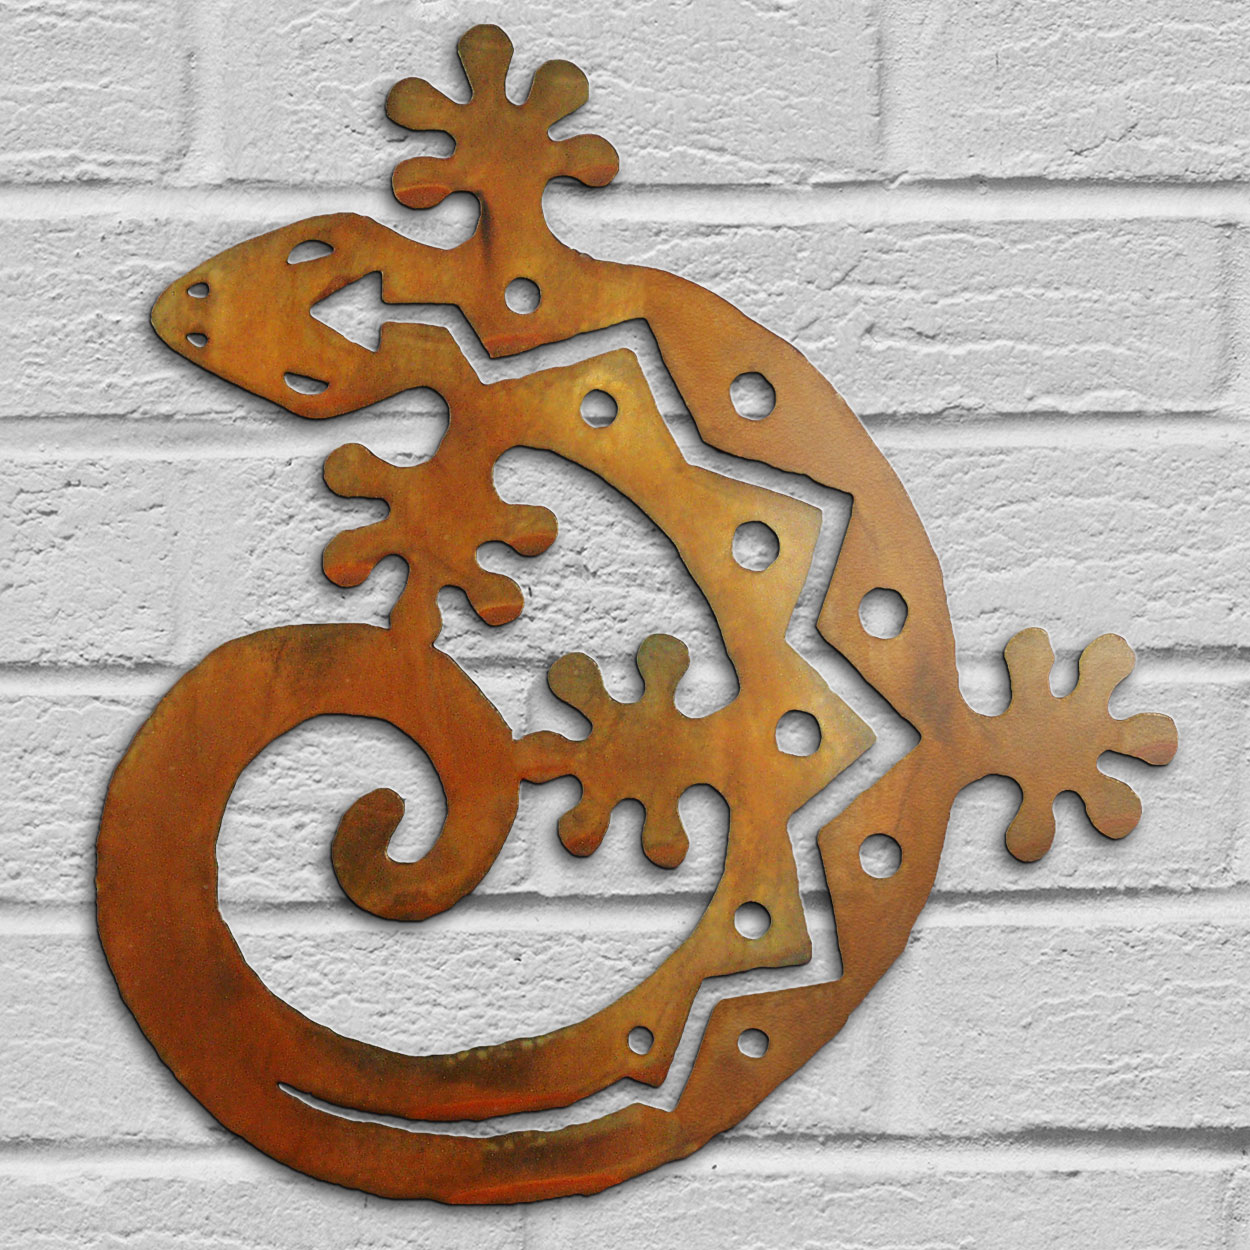 12in Small C-Shaped Lizard 3D Metal Wall Art in Rust Finish - Southwest Decor